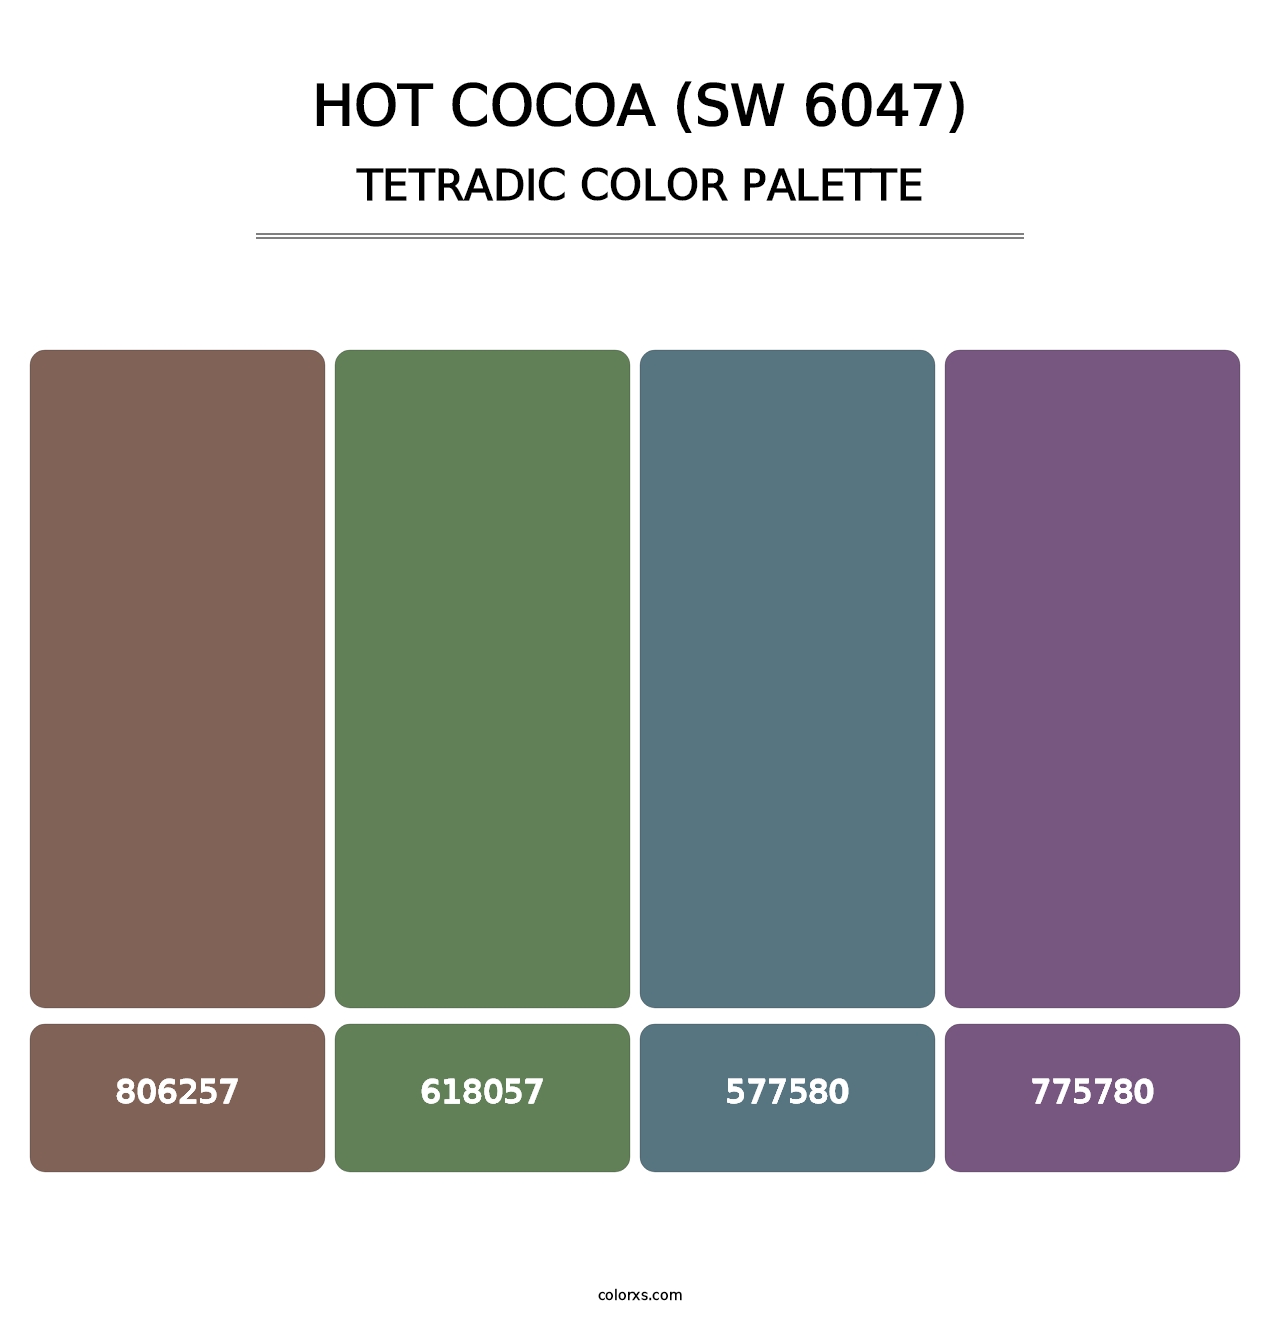 Hot Cocoa (SW 6047) - Tetradic Color Palette